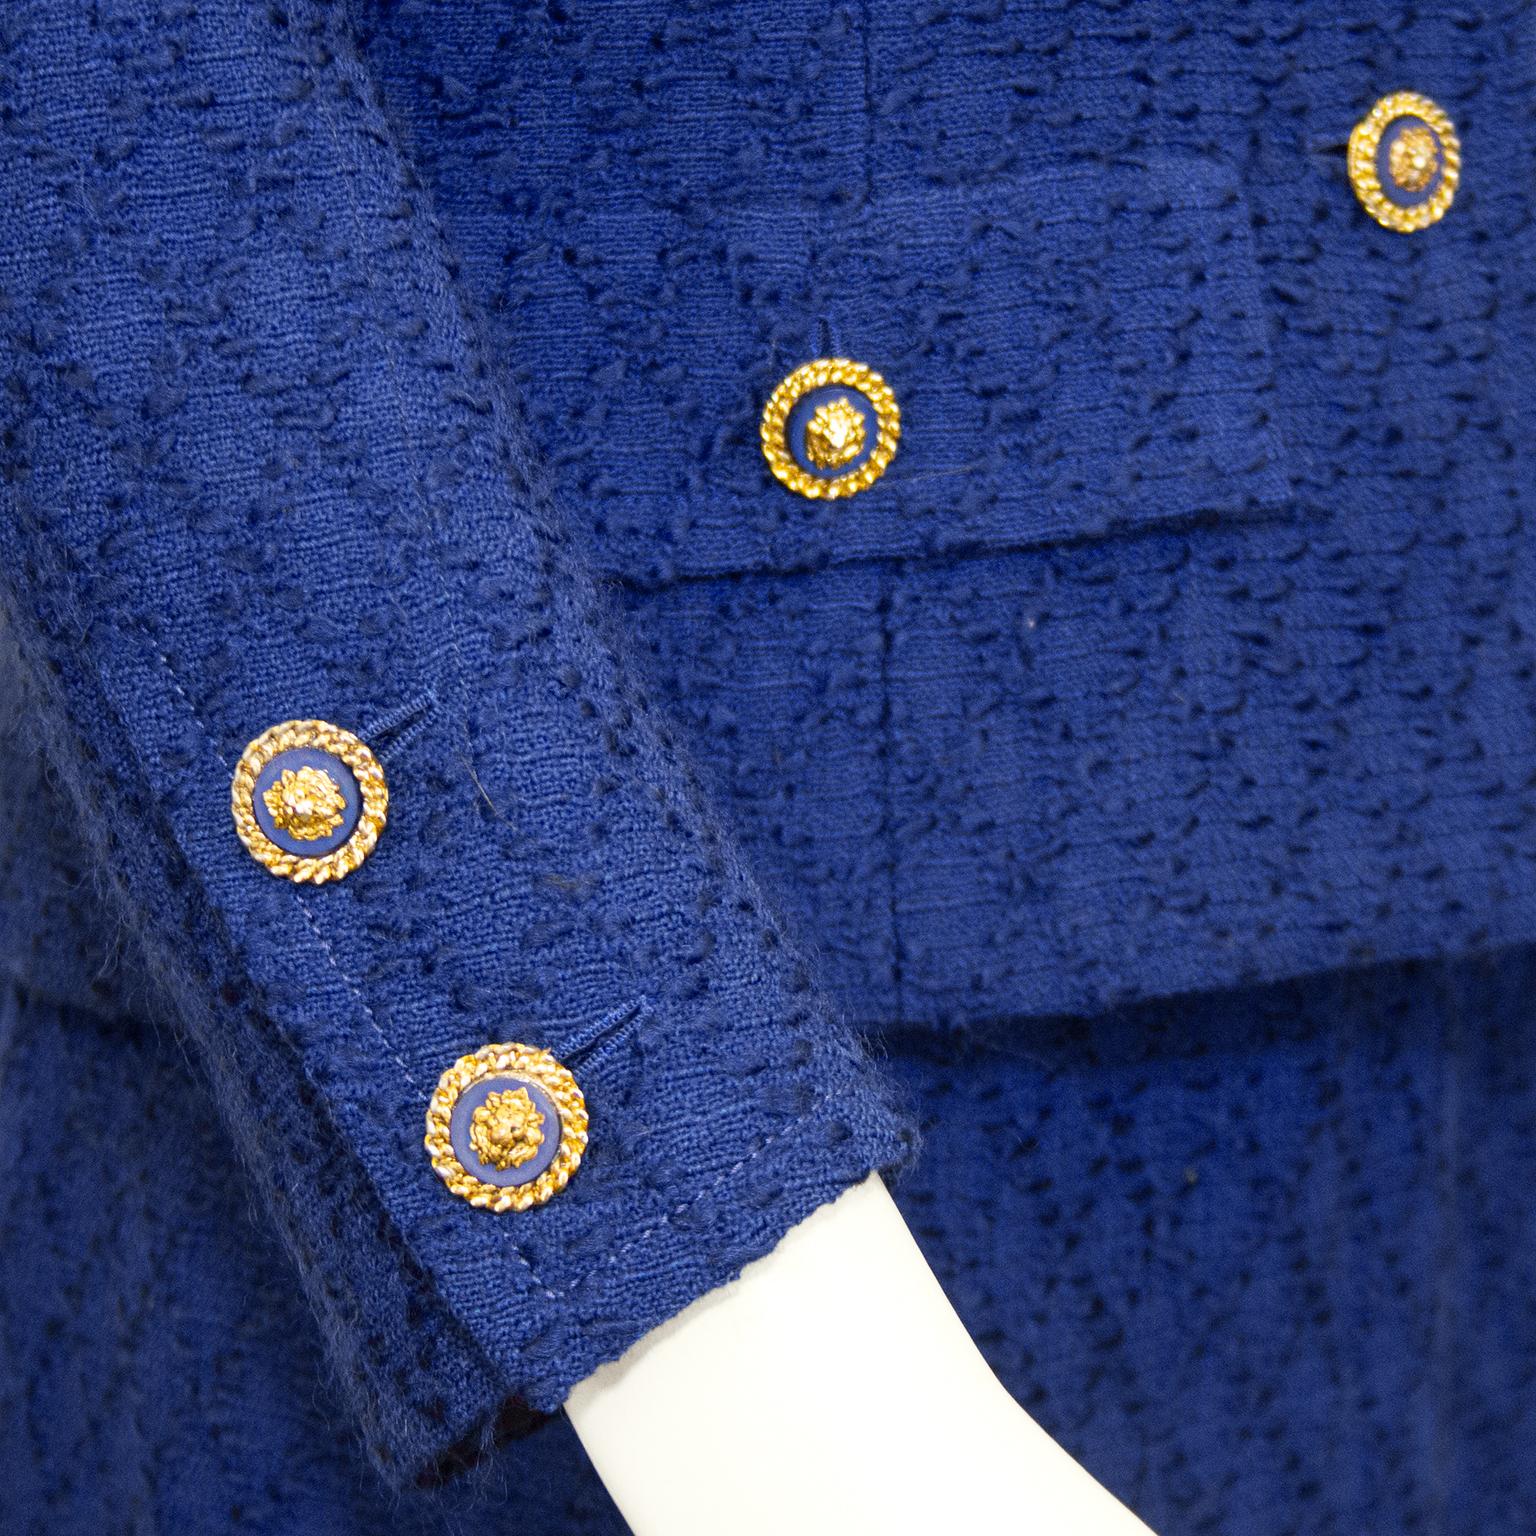 Bleu Chanel Haute Couture 1980, tailleur jupe bleu royal en vente